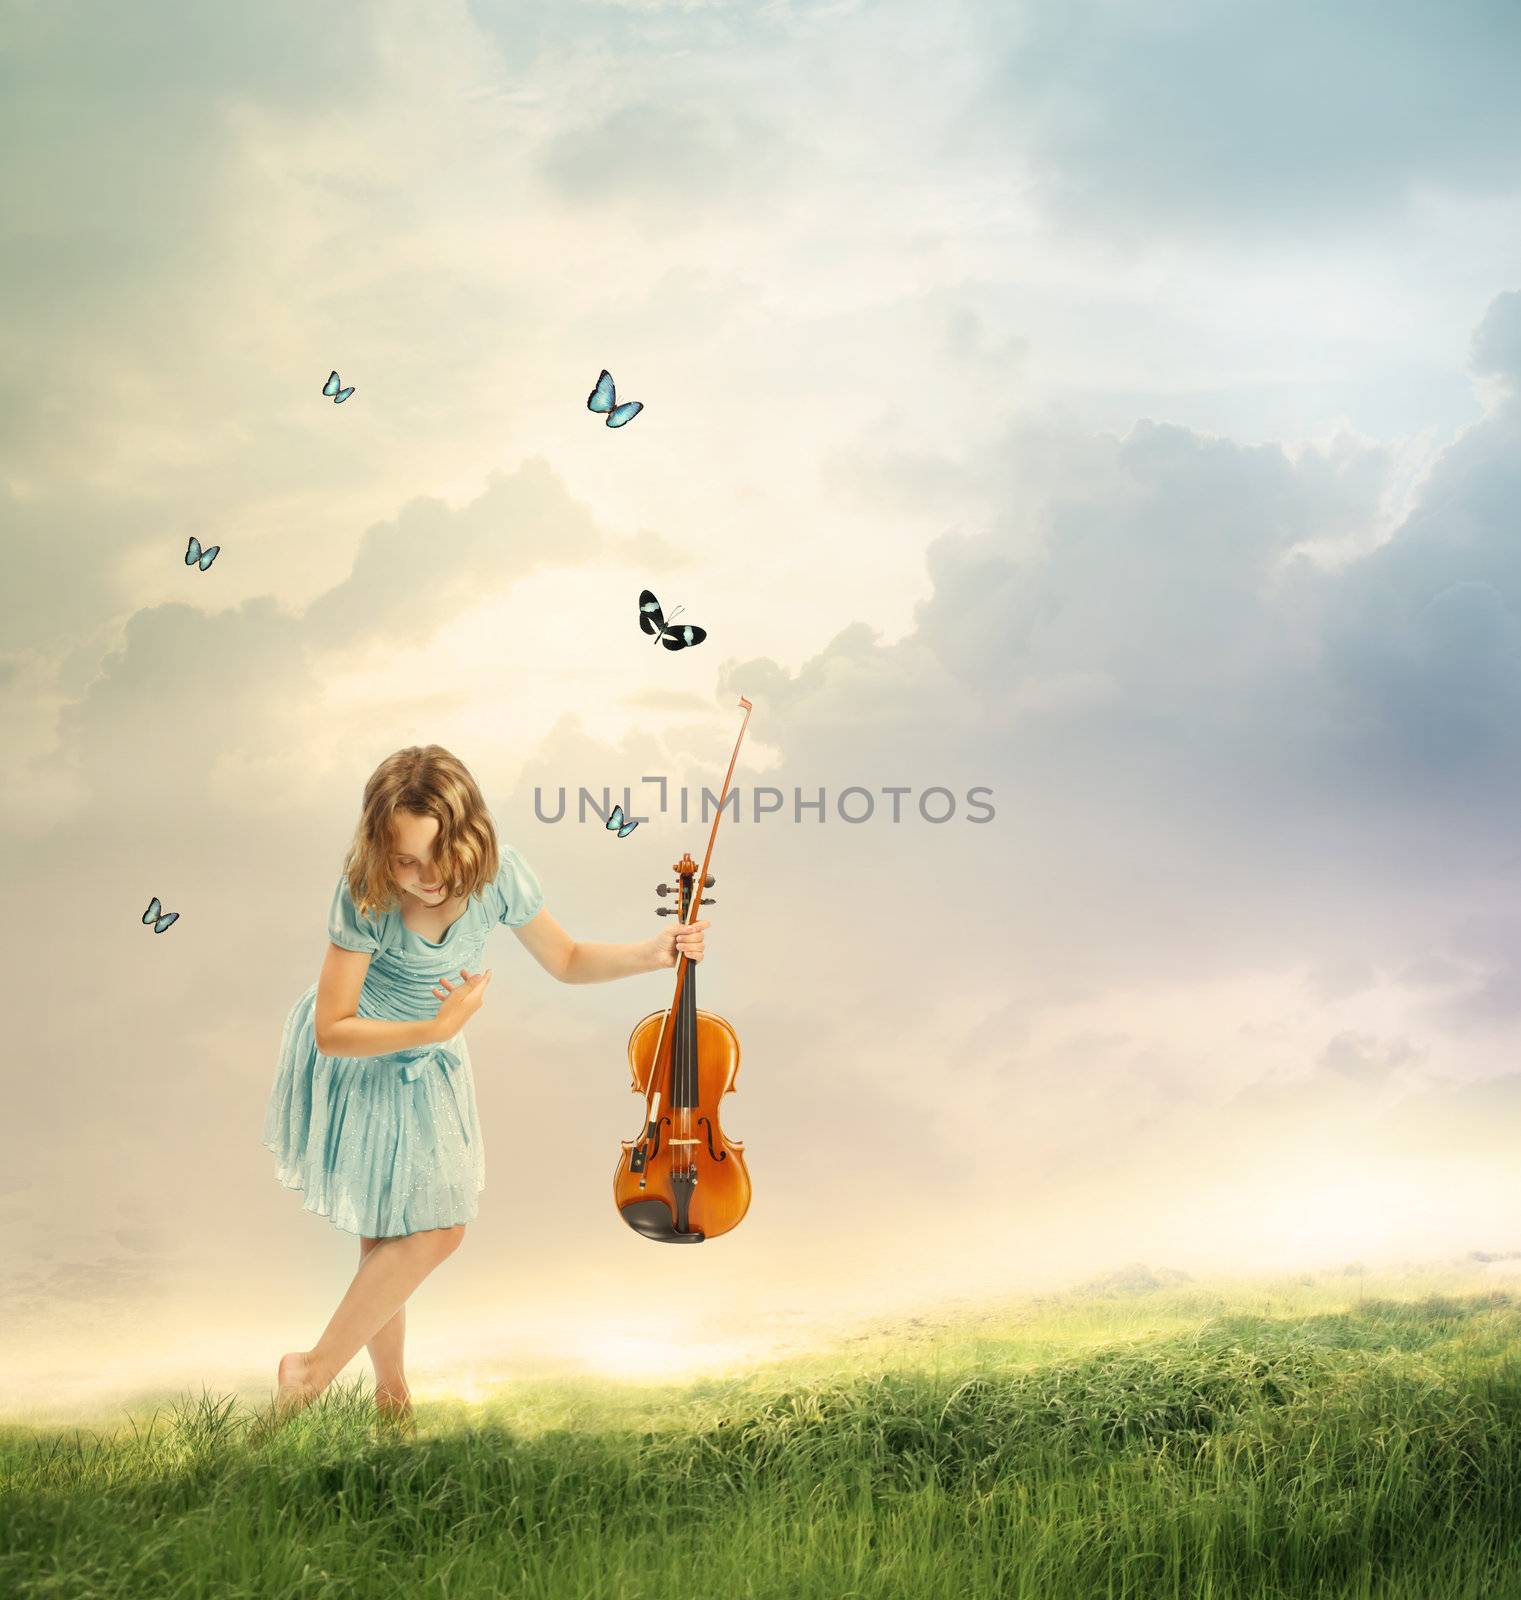 Little Girl with Violin in a Fantasy Landscape by melpomene